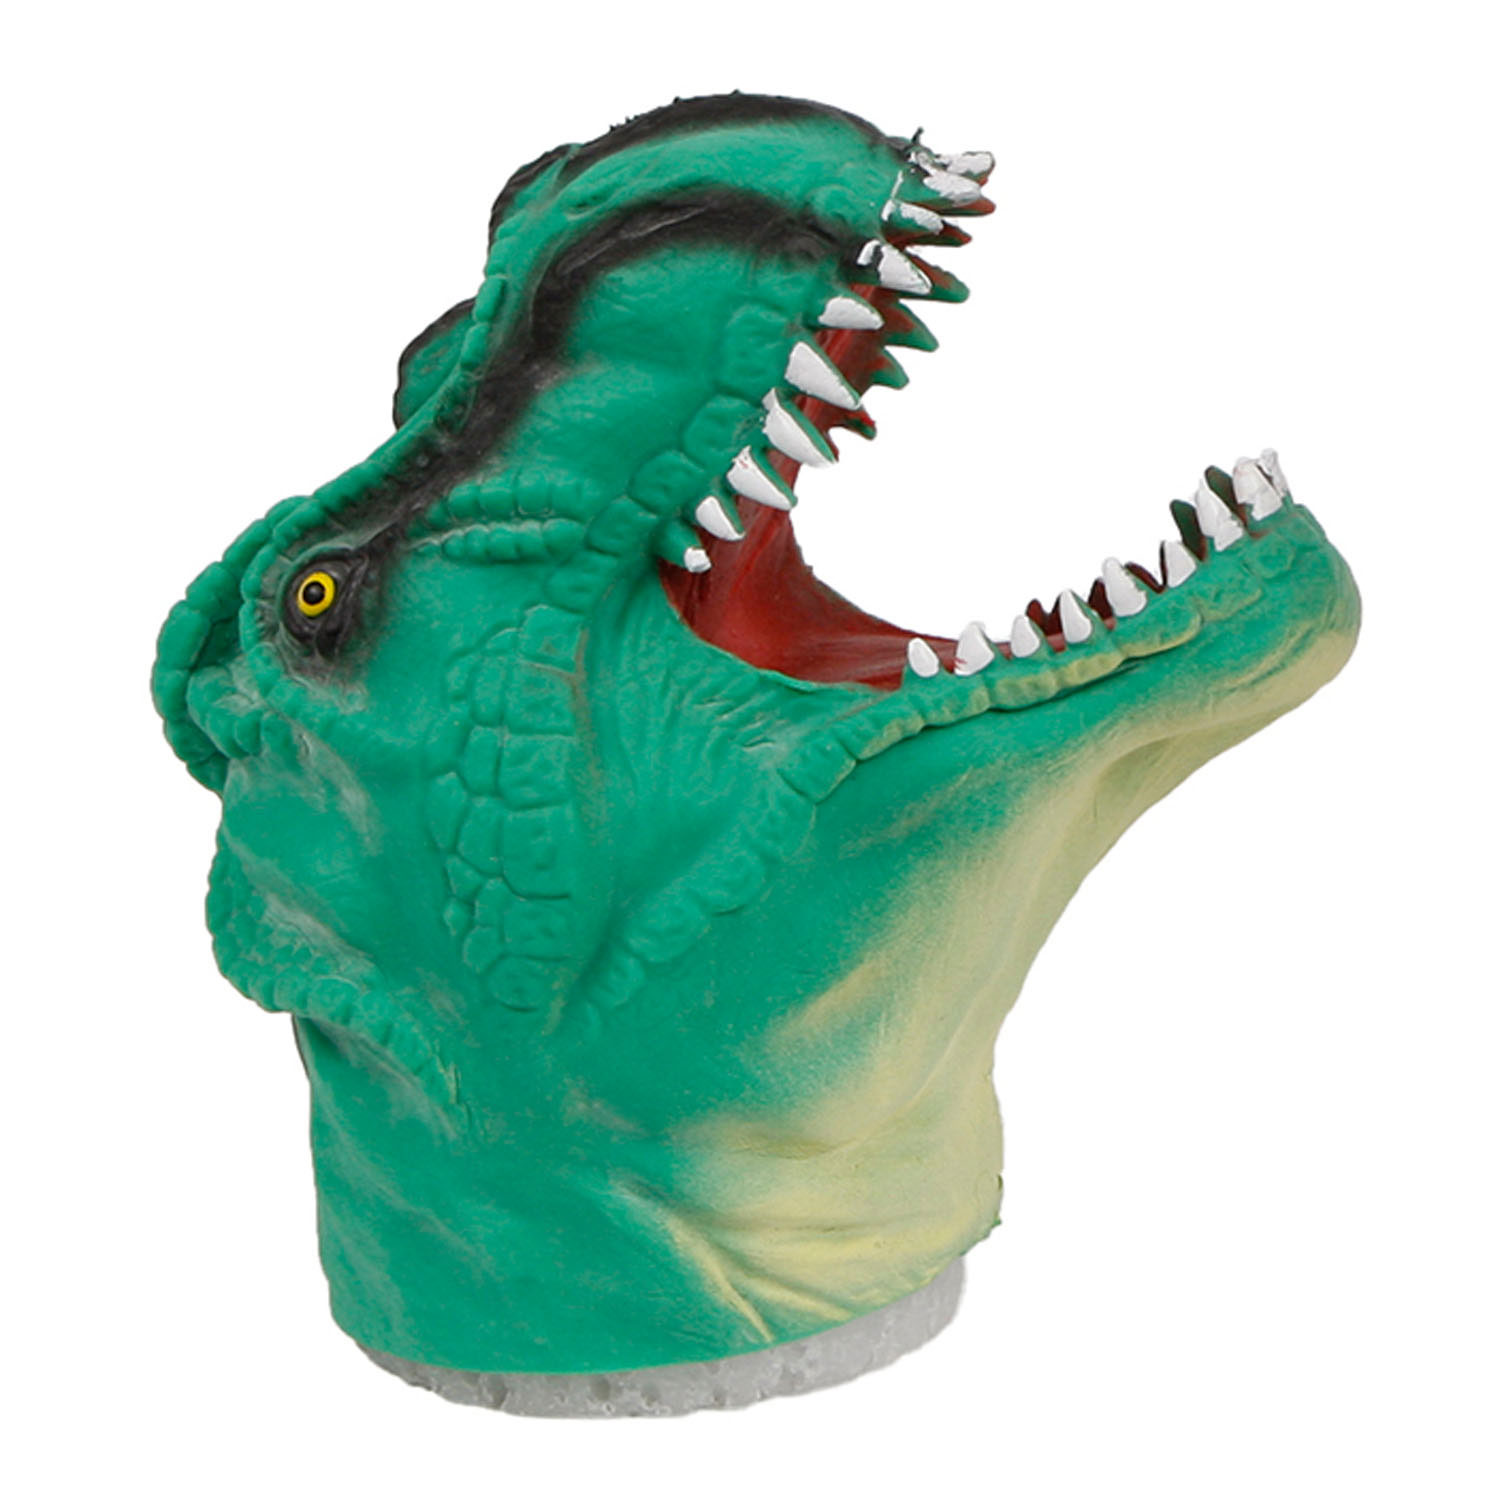 DinoWorld Dinosaurus Handpop